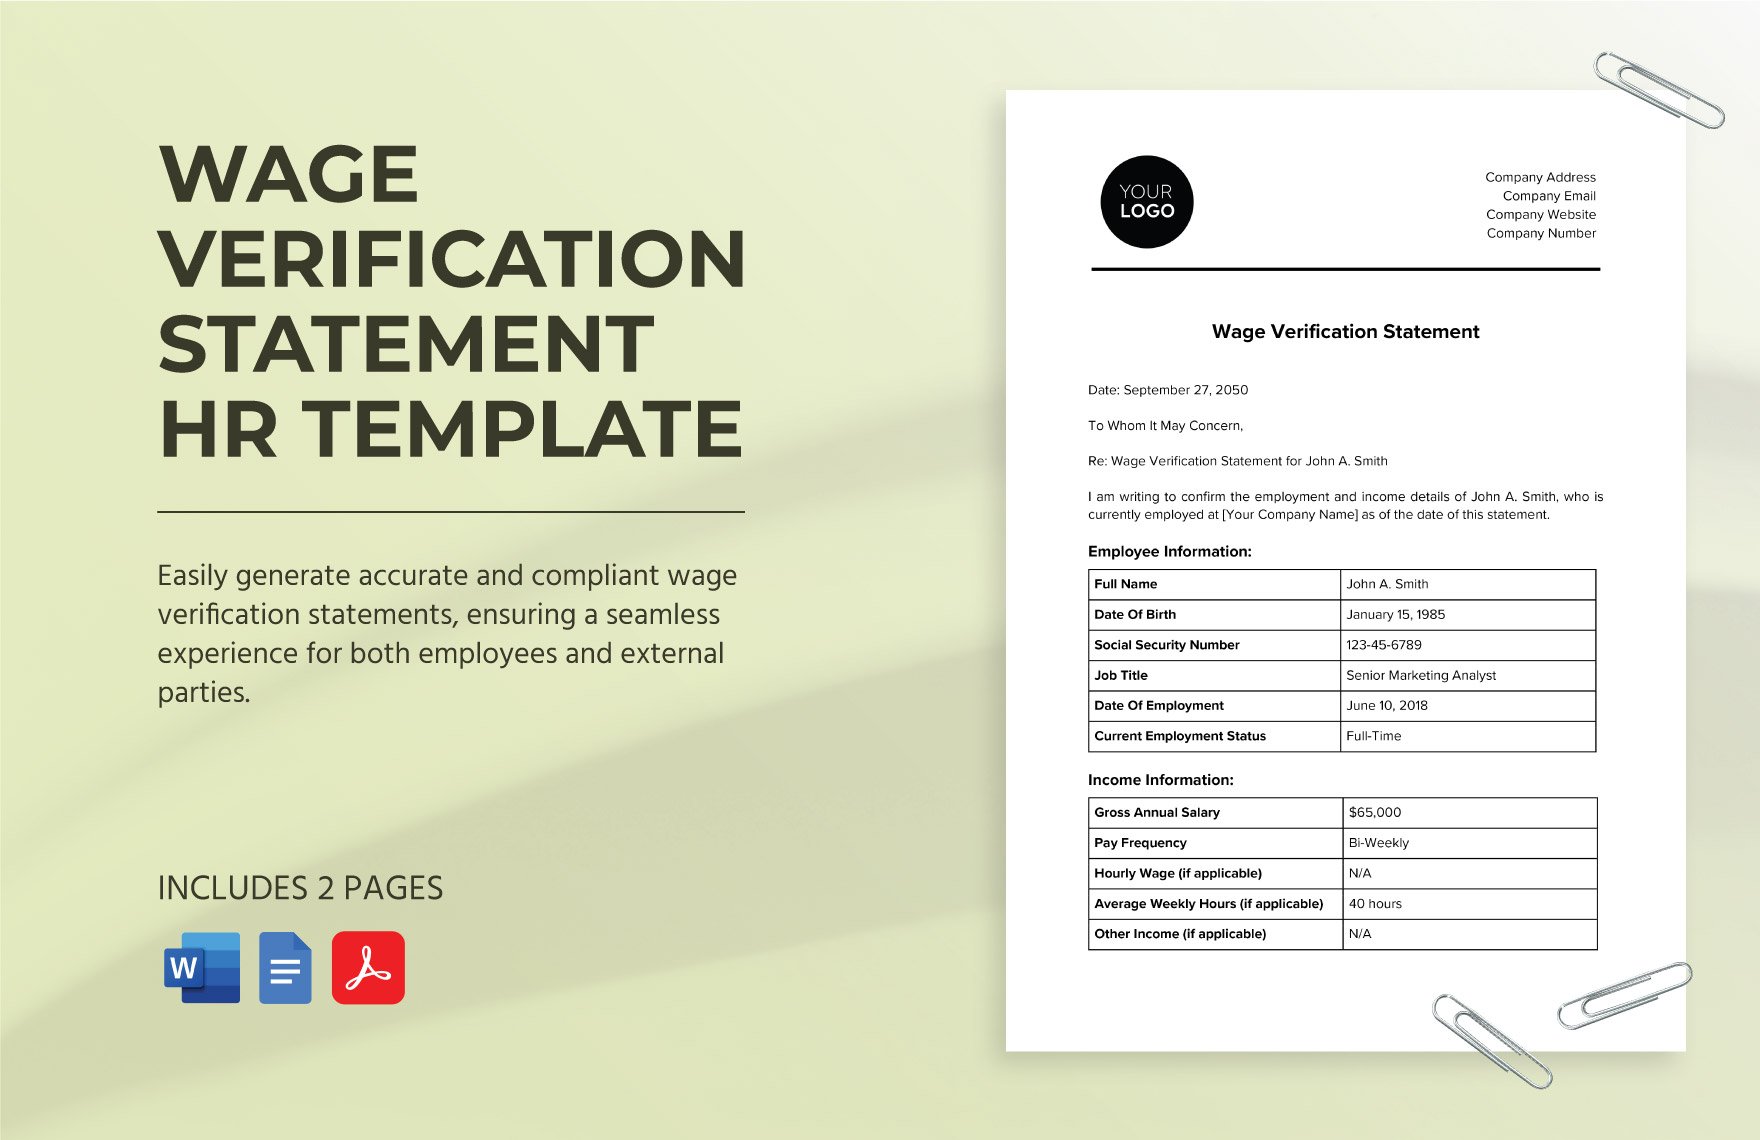 Wage Verification Statement HR Template in Word, Google Docs, PDF